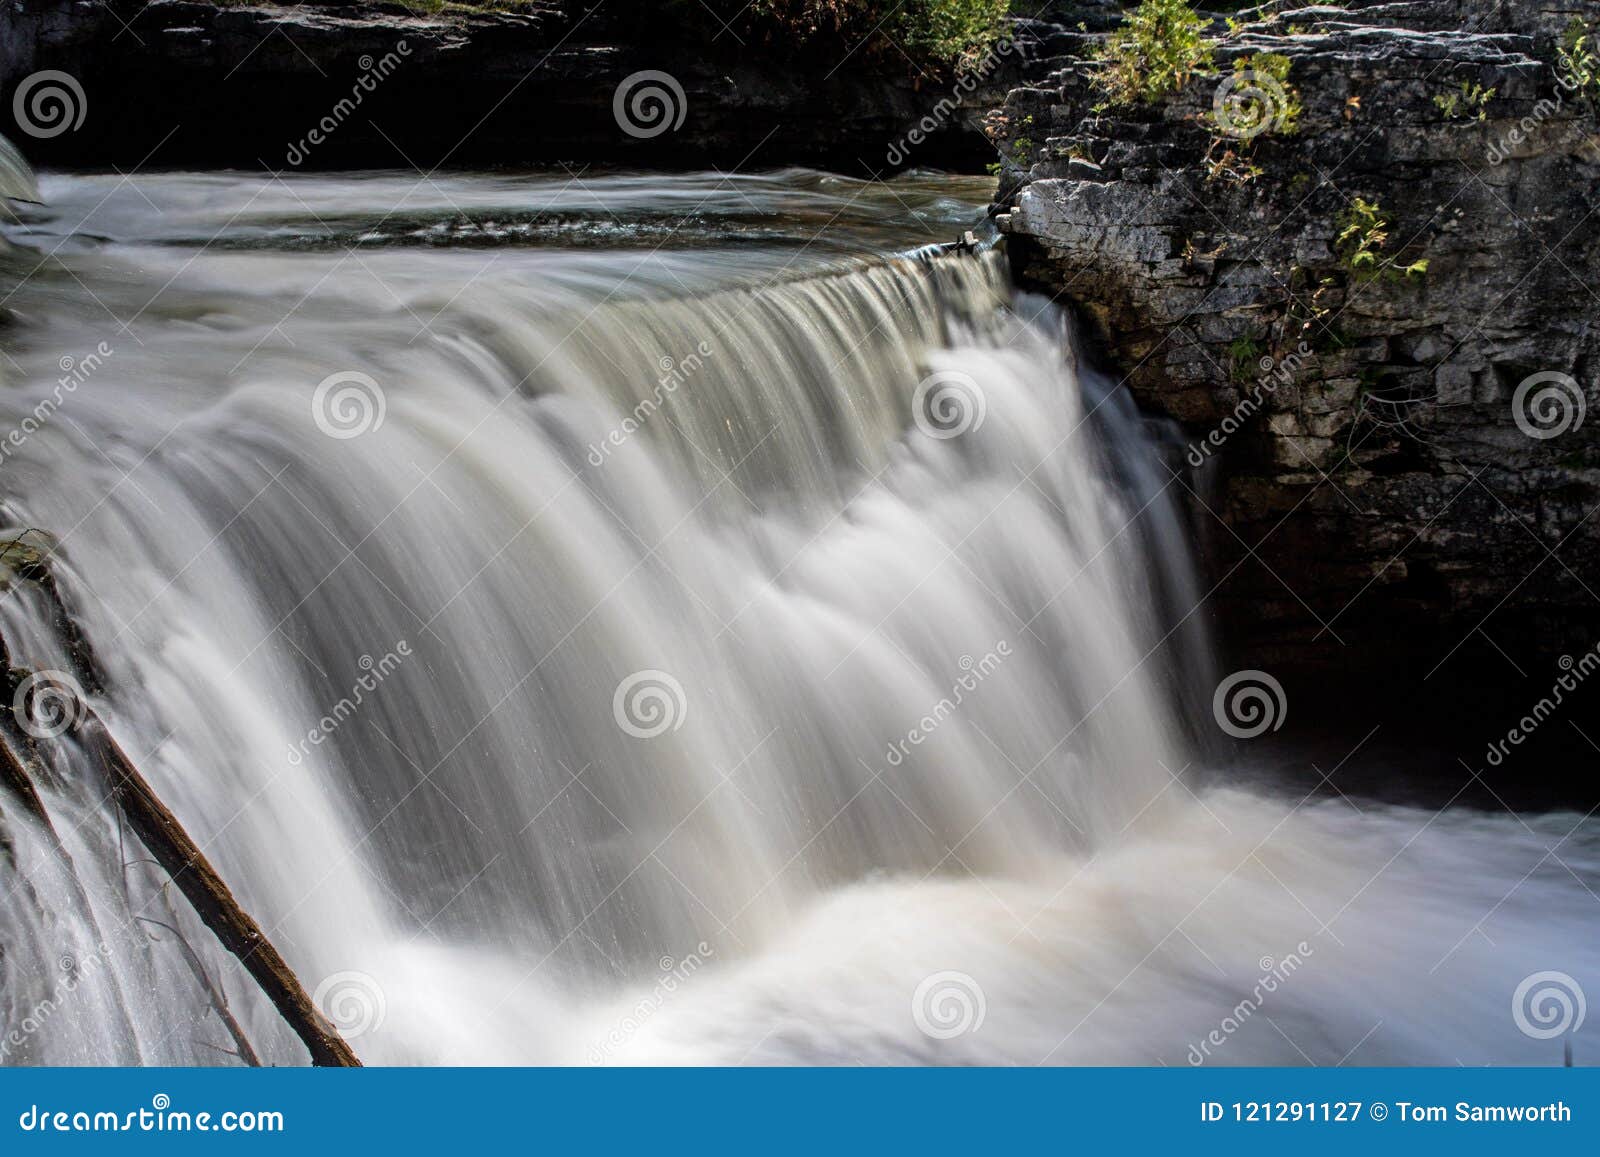 rockwood falls on eramosa river